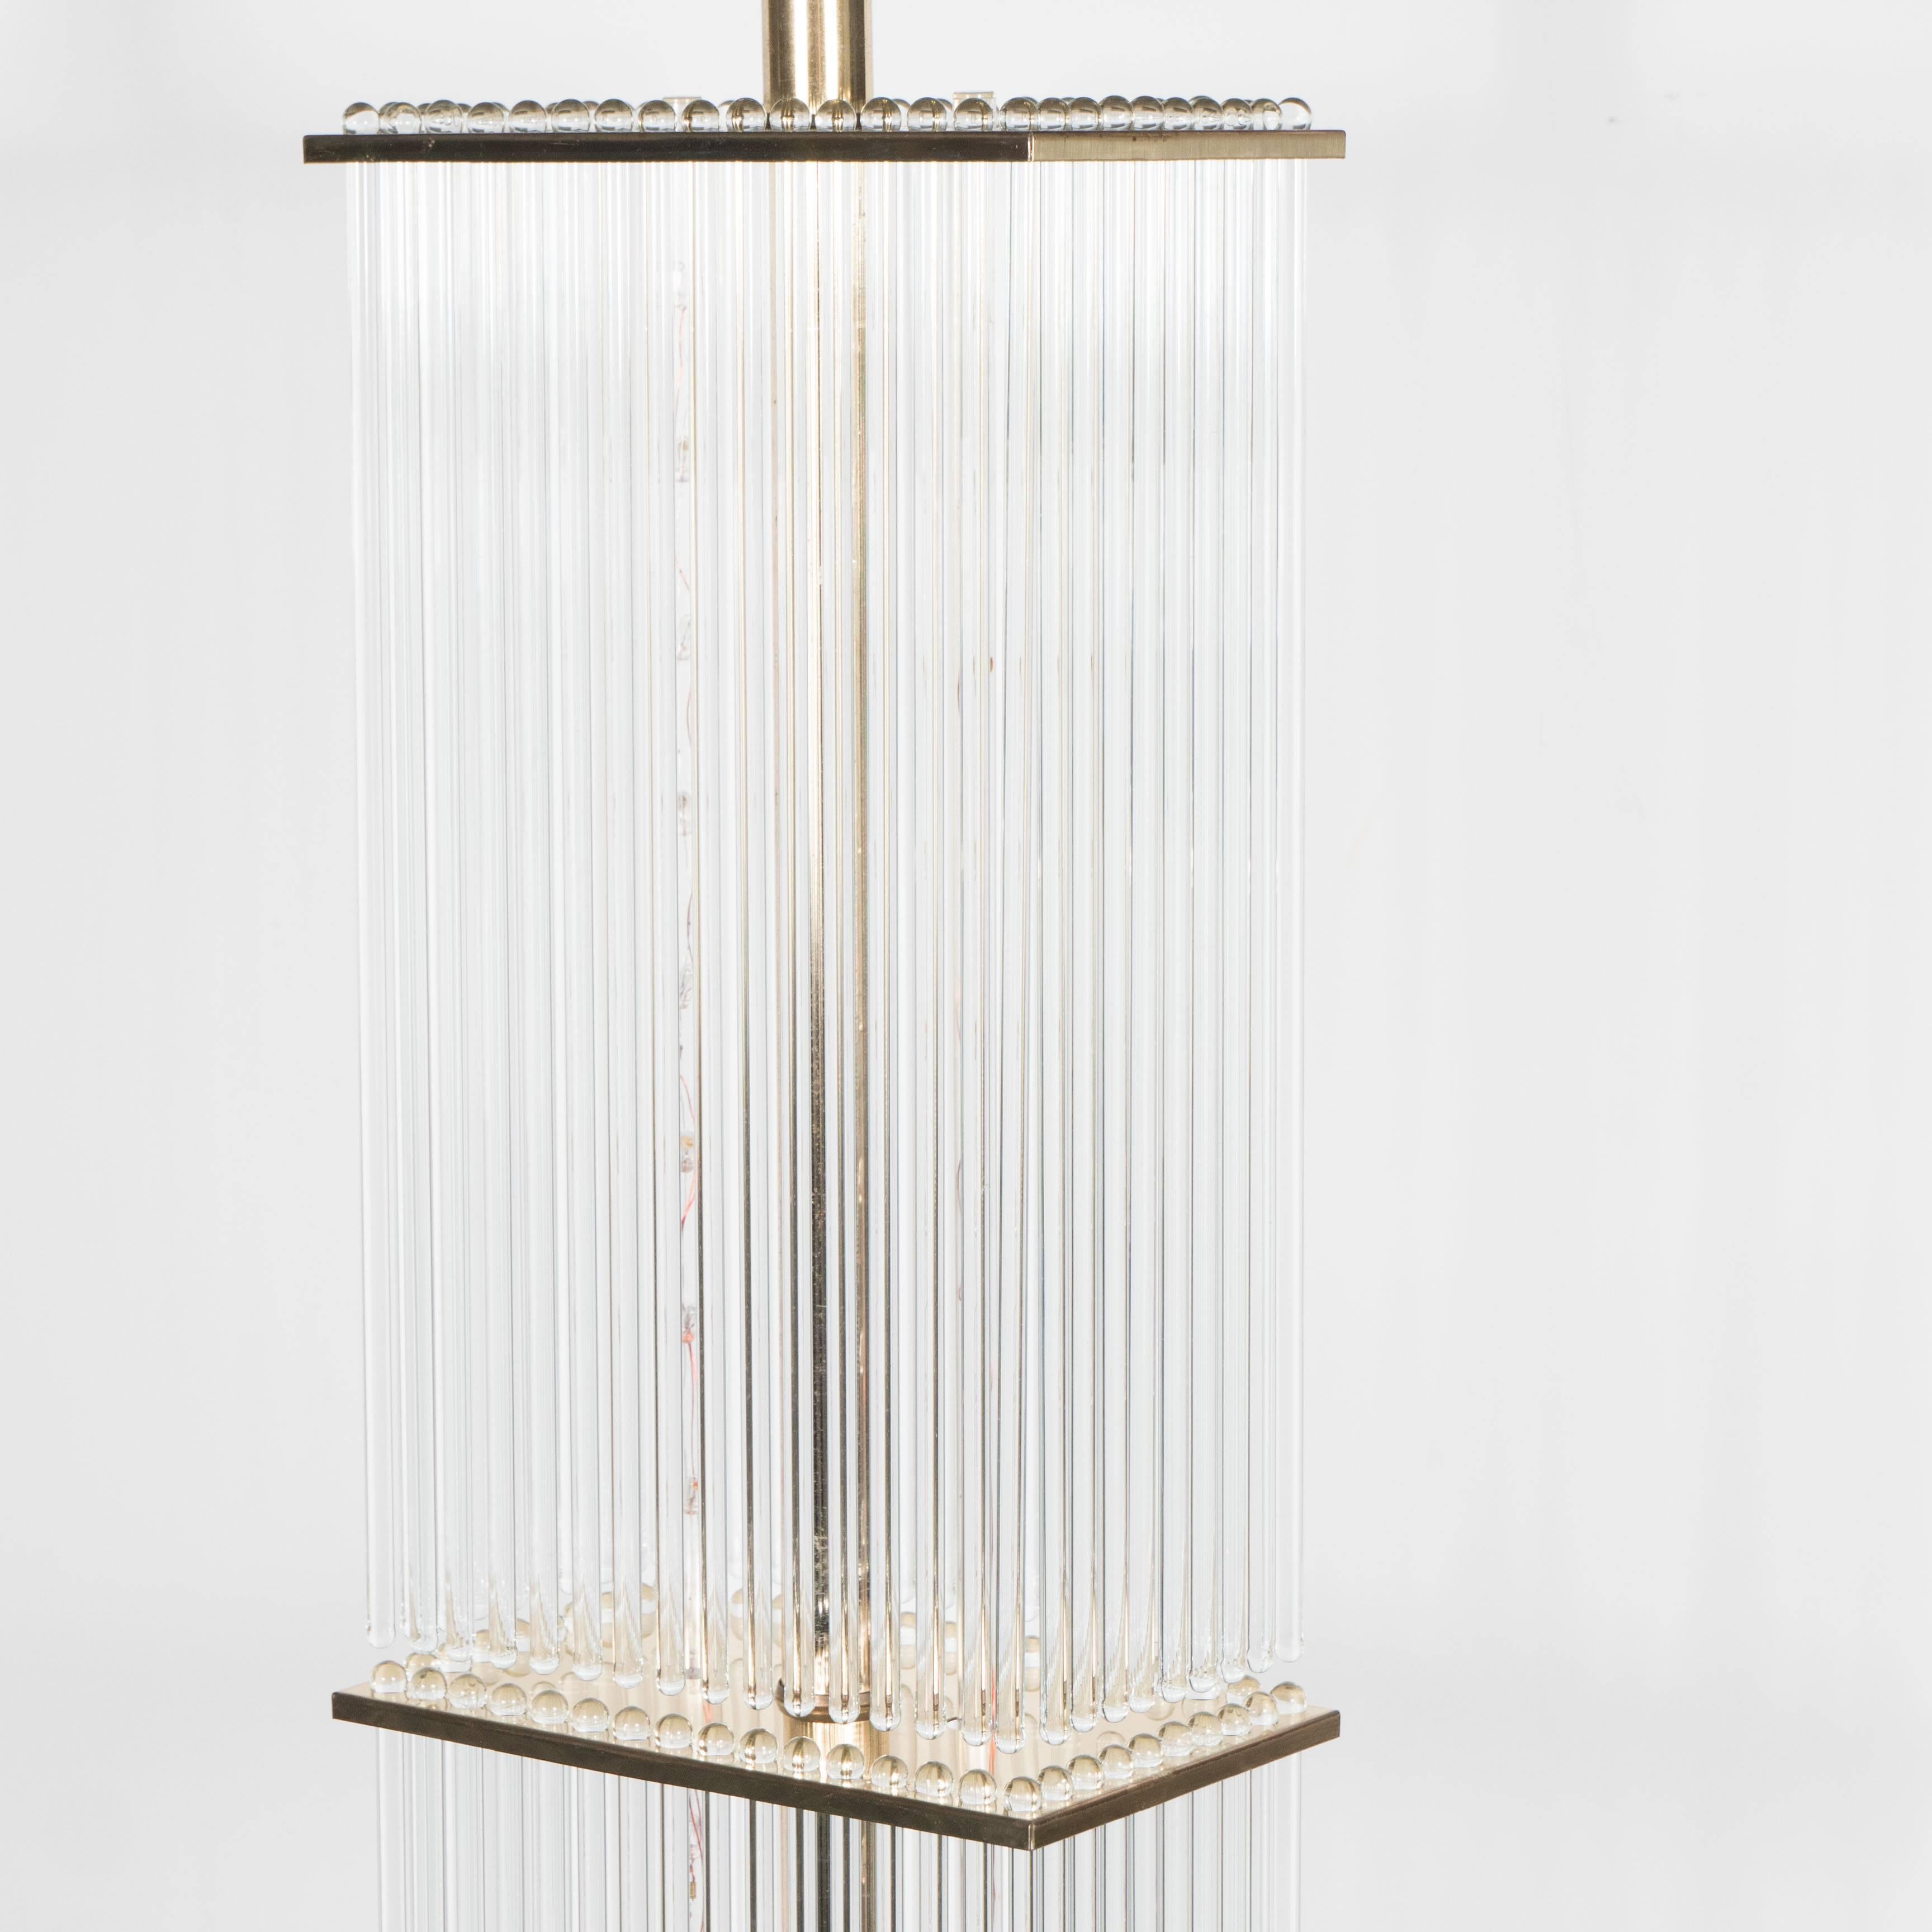 Italian Mid-Century Brass and Glass Rod Floor Lamp by Sciolari for Lightolier